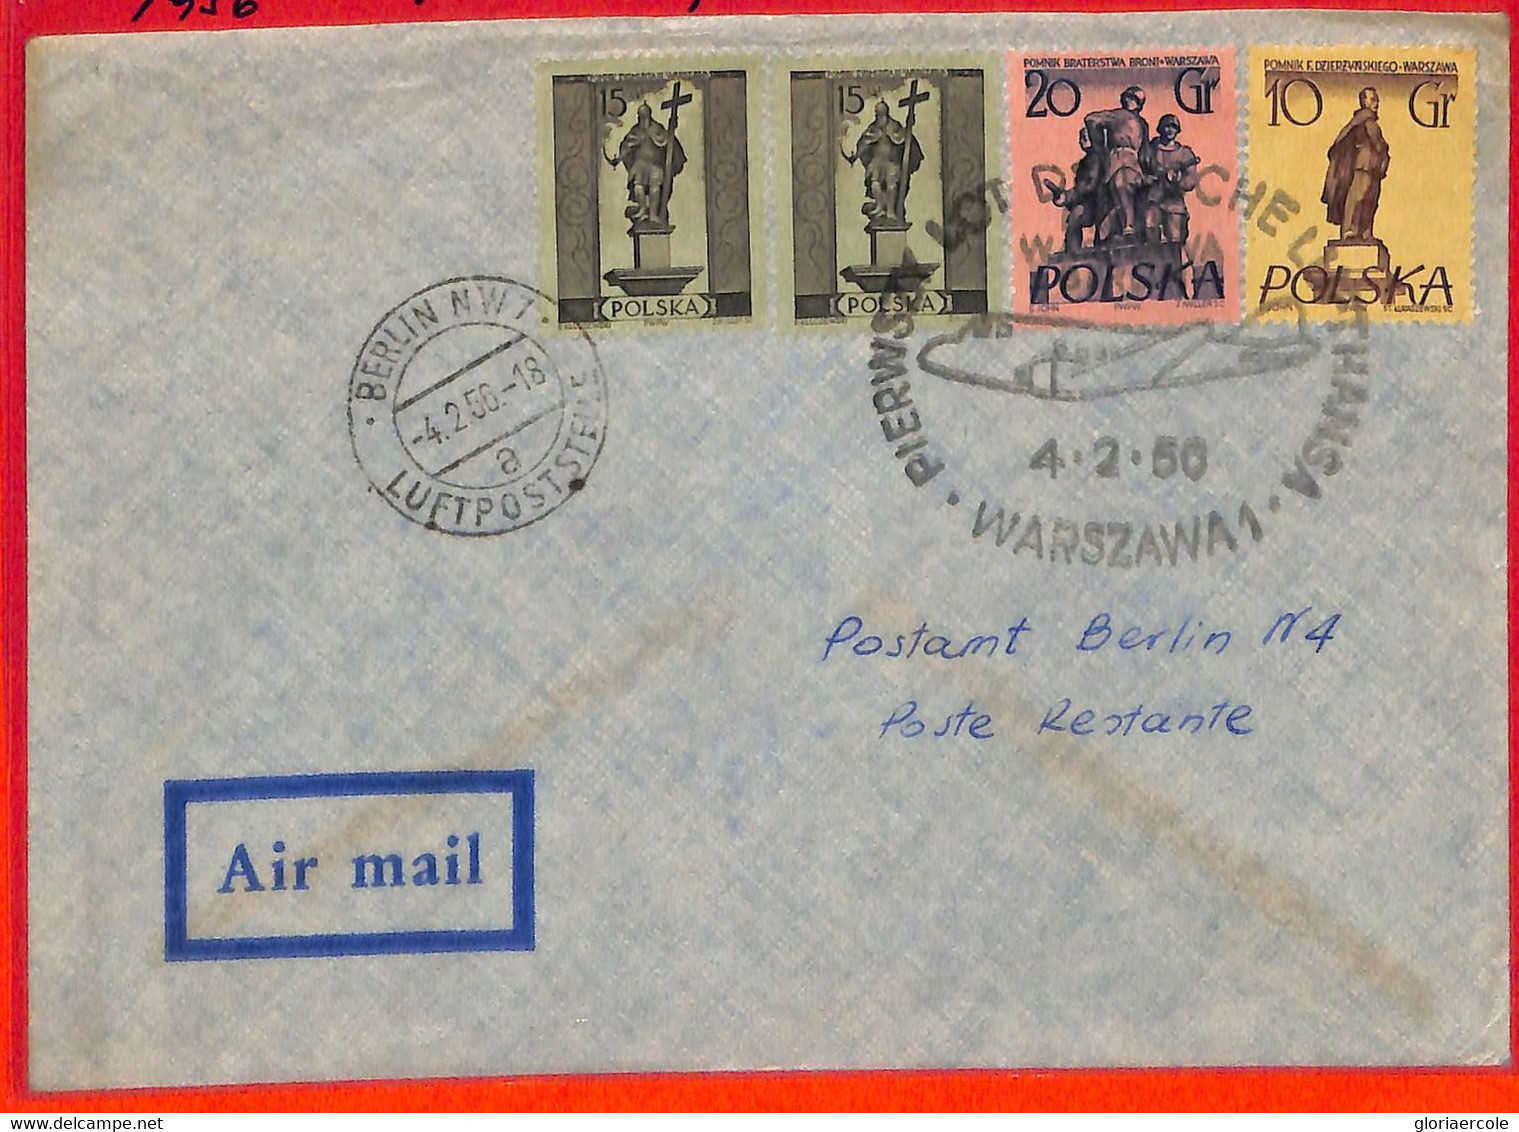 Aa3410 - POLONIA - Postal History - FIRST FLIGHT Cover WARSAW - BERLIN  1956 - Aviones